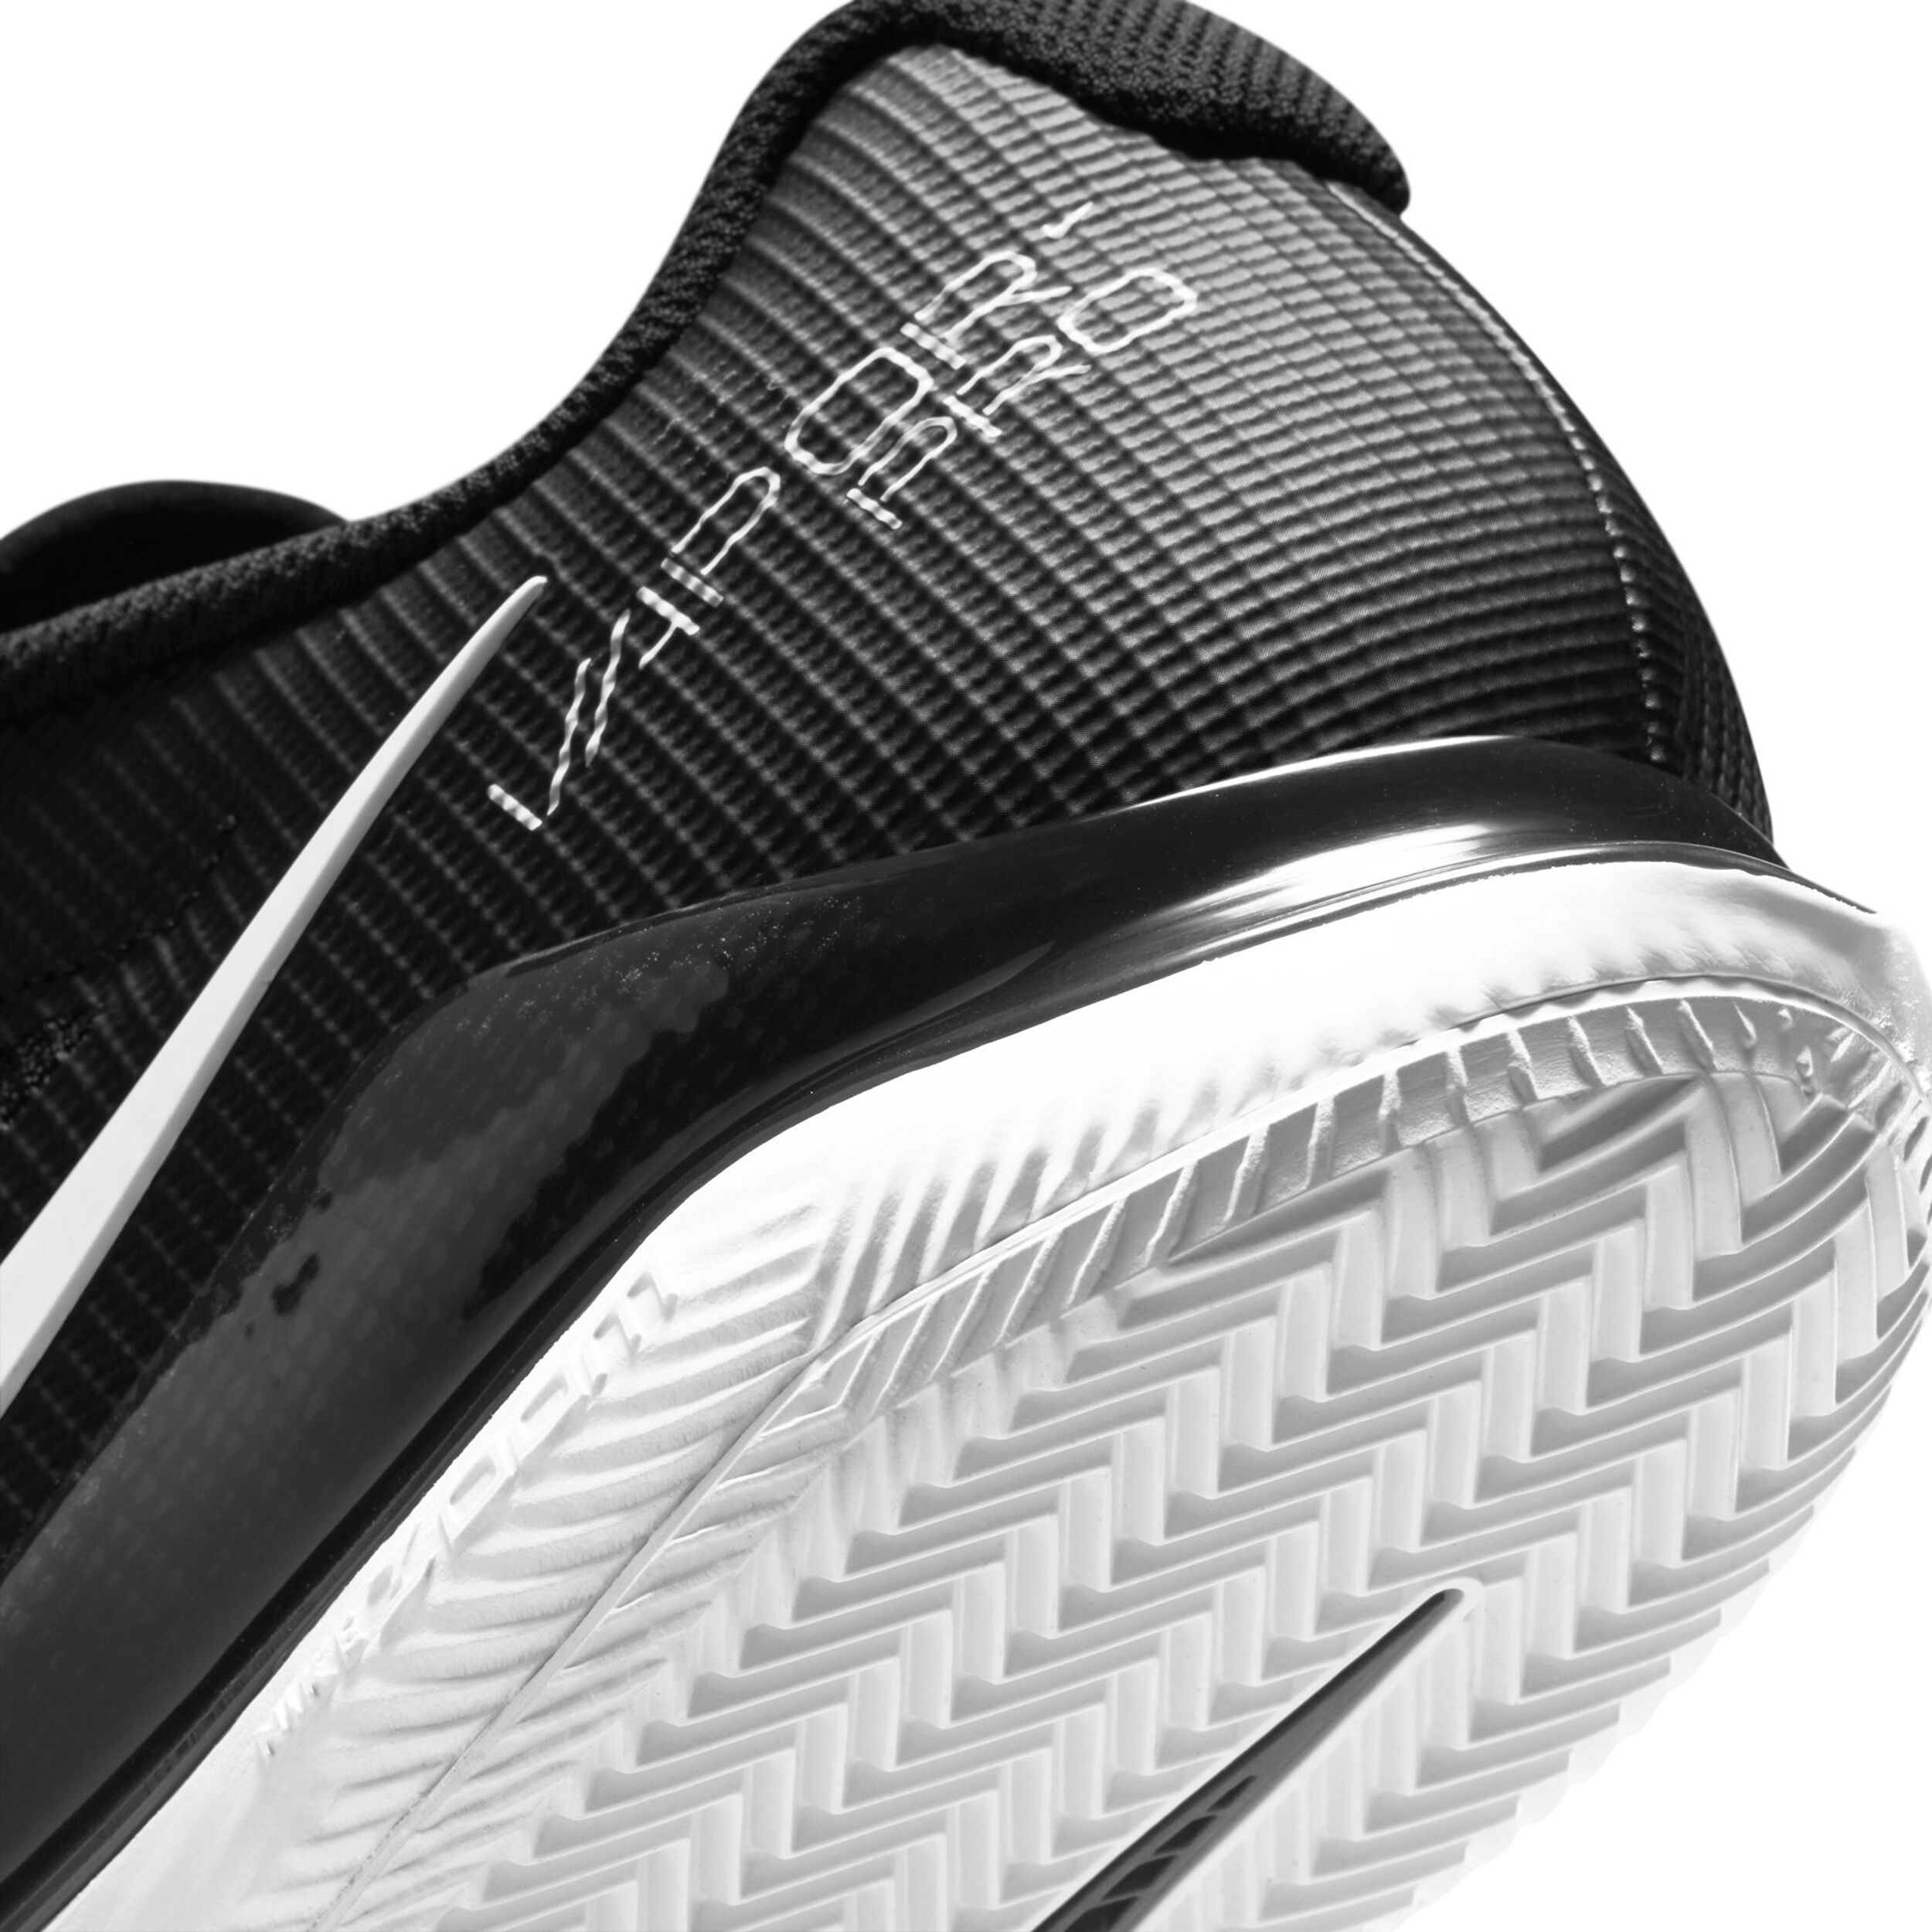 Nike Air Zoom Vapor Pro Chaussure Terre Battue Hommes - Noir ...